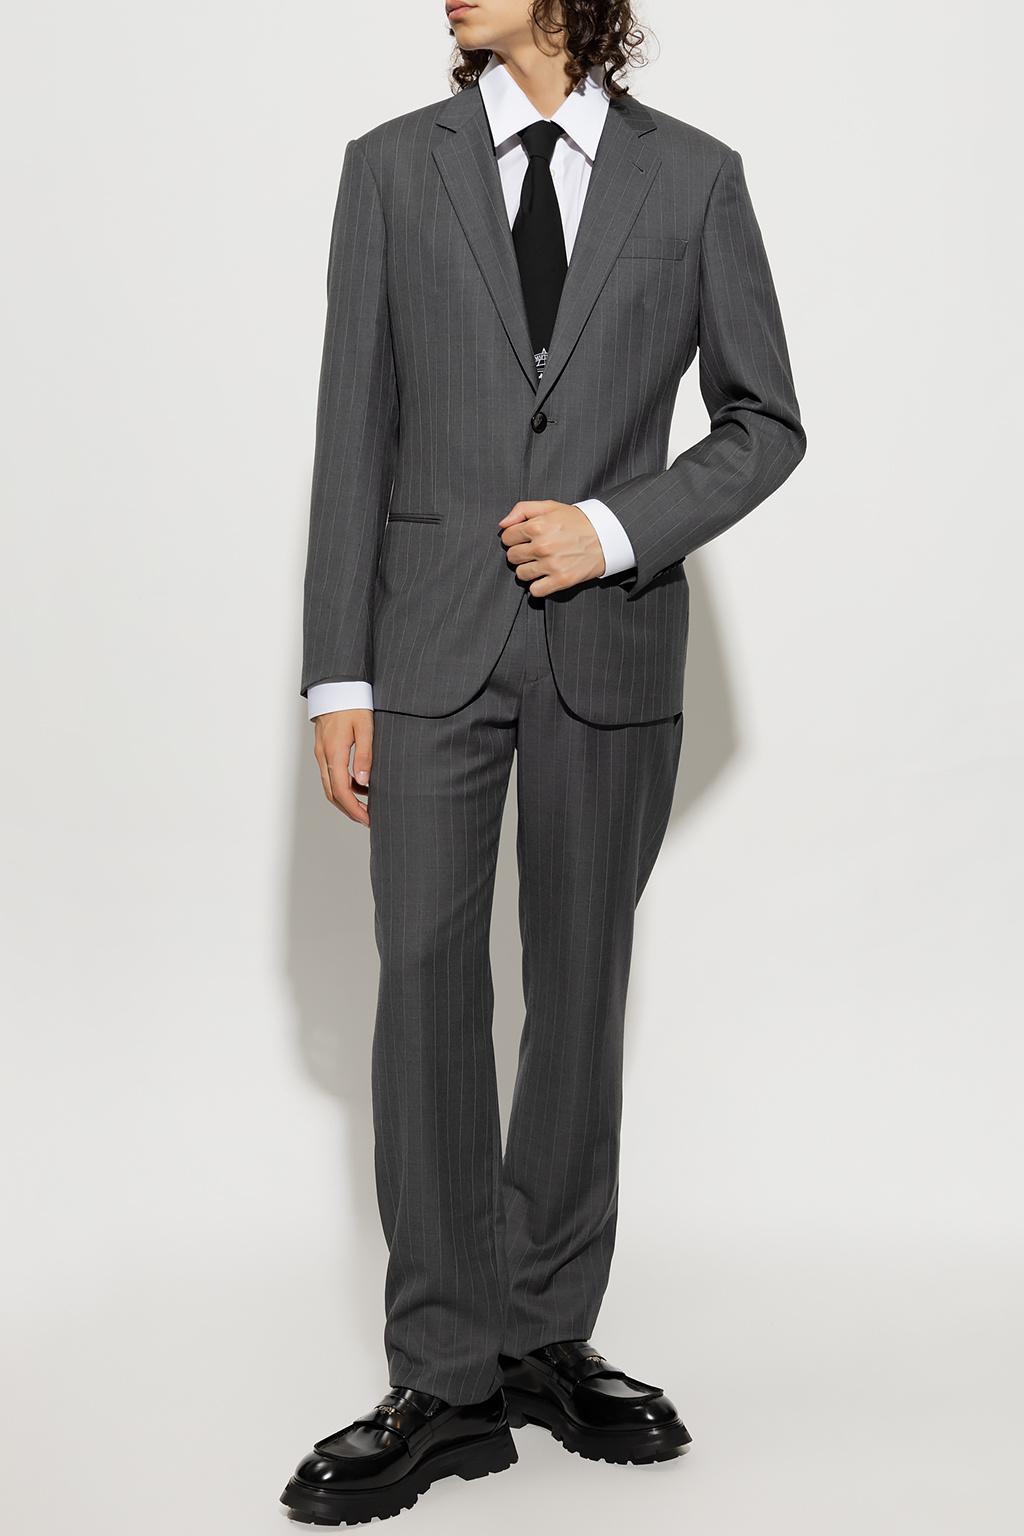 NWT Giorgio Armani Black Label Charcoal Gray/Blue Windowpane Suit Size  48R/38R | eBay